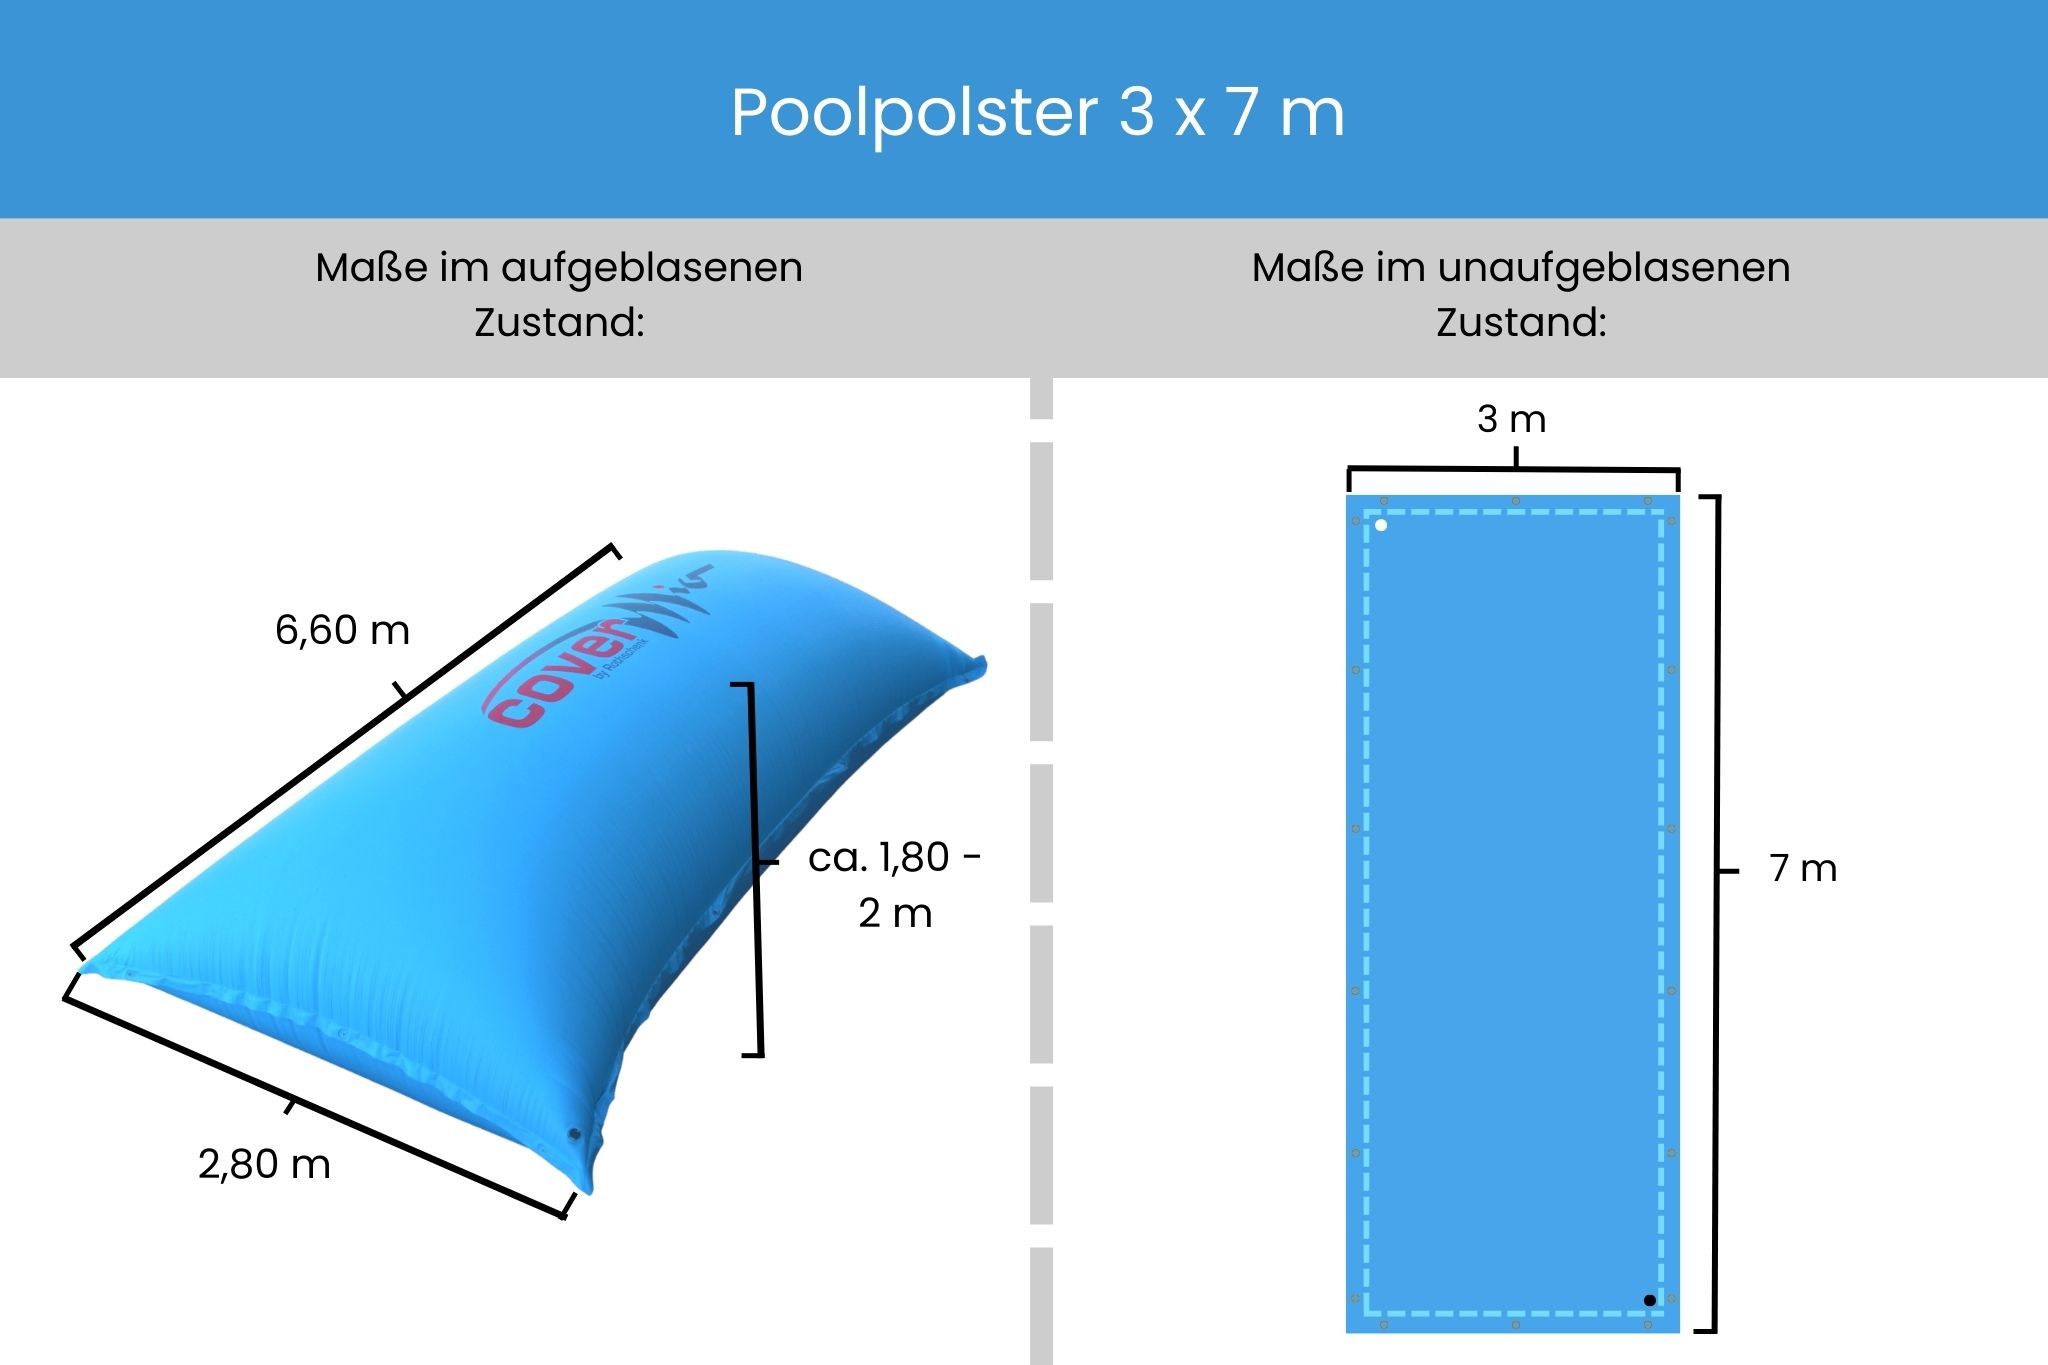 Poolpolser 3 x 7 m